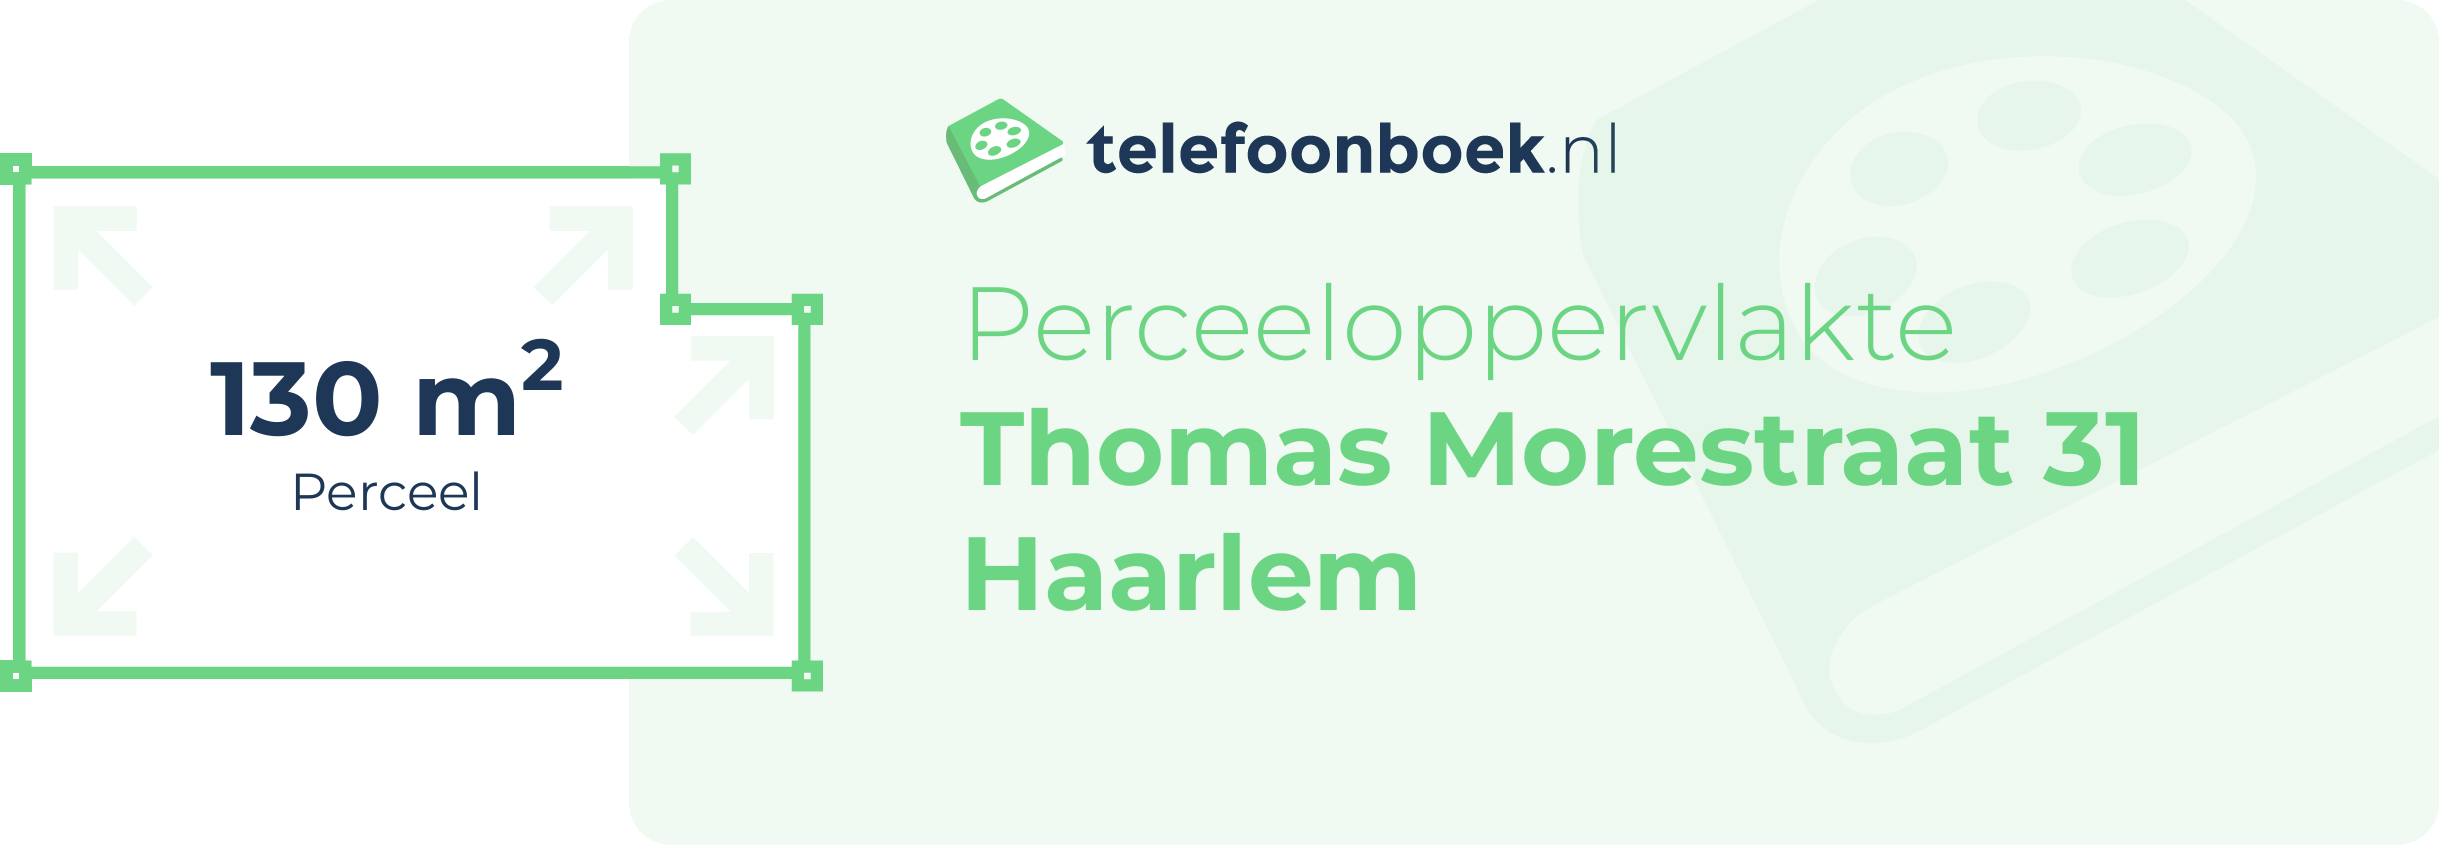 Perceeloppervlakte Thomas Morestraat 31 Haarlem